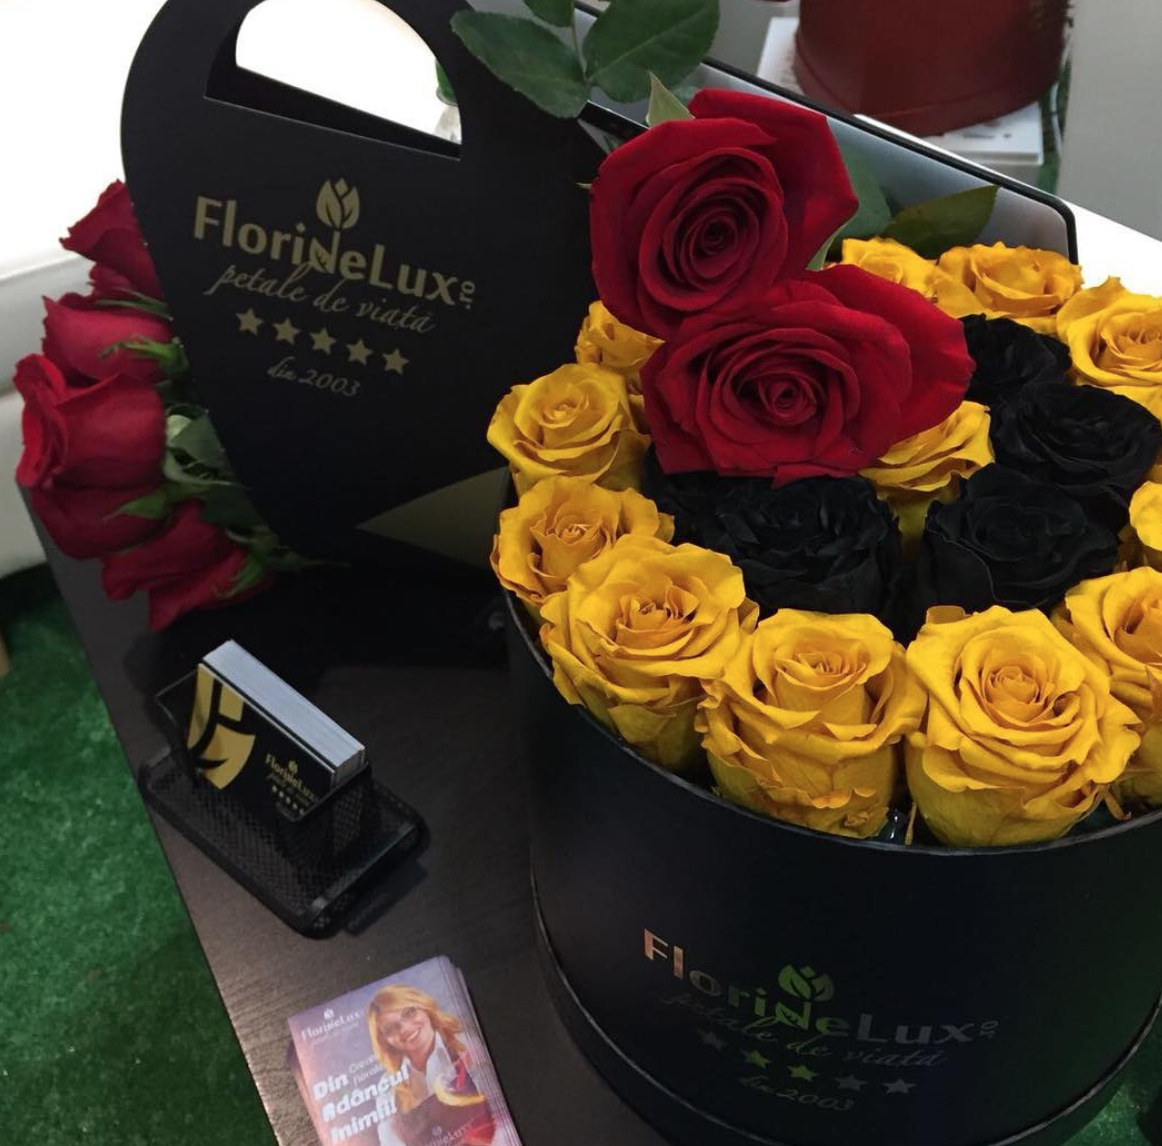 Trandafiri criogenati doar la FlorideLux! Arata splendid, nu?! :)